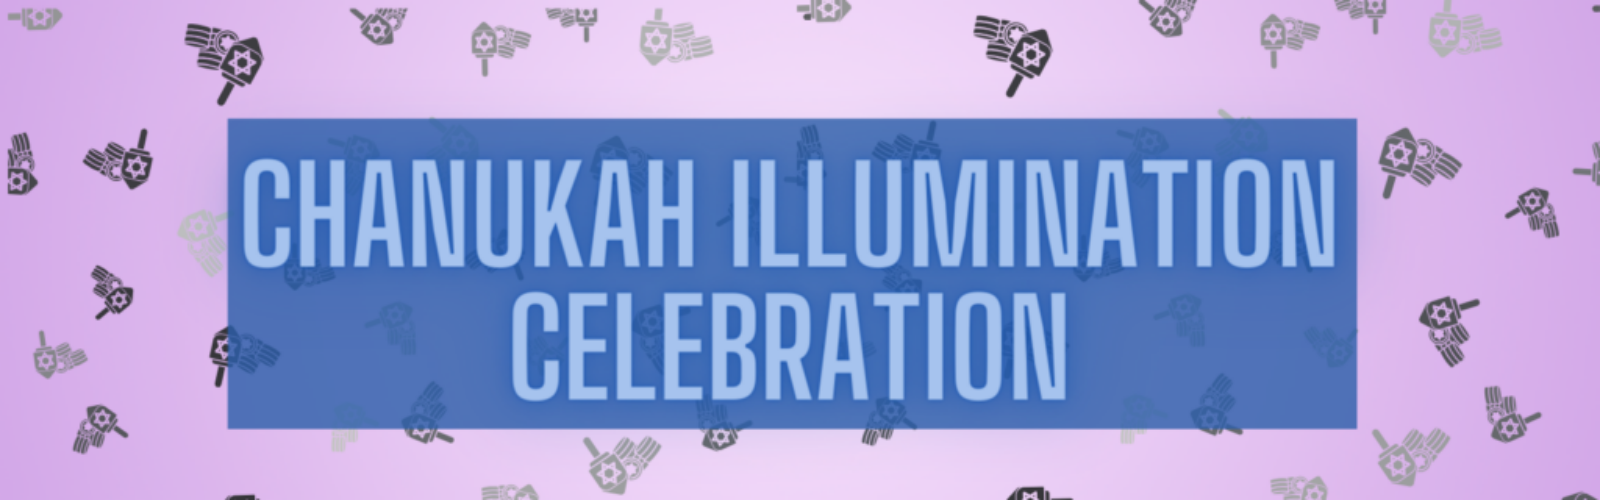 Chanukah illumination celebration